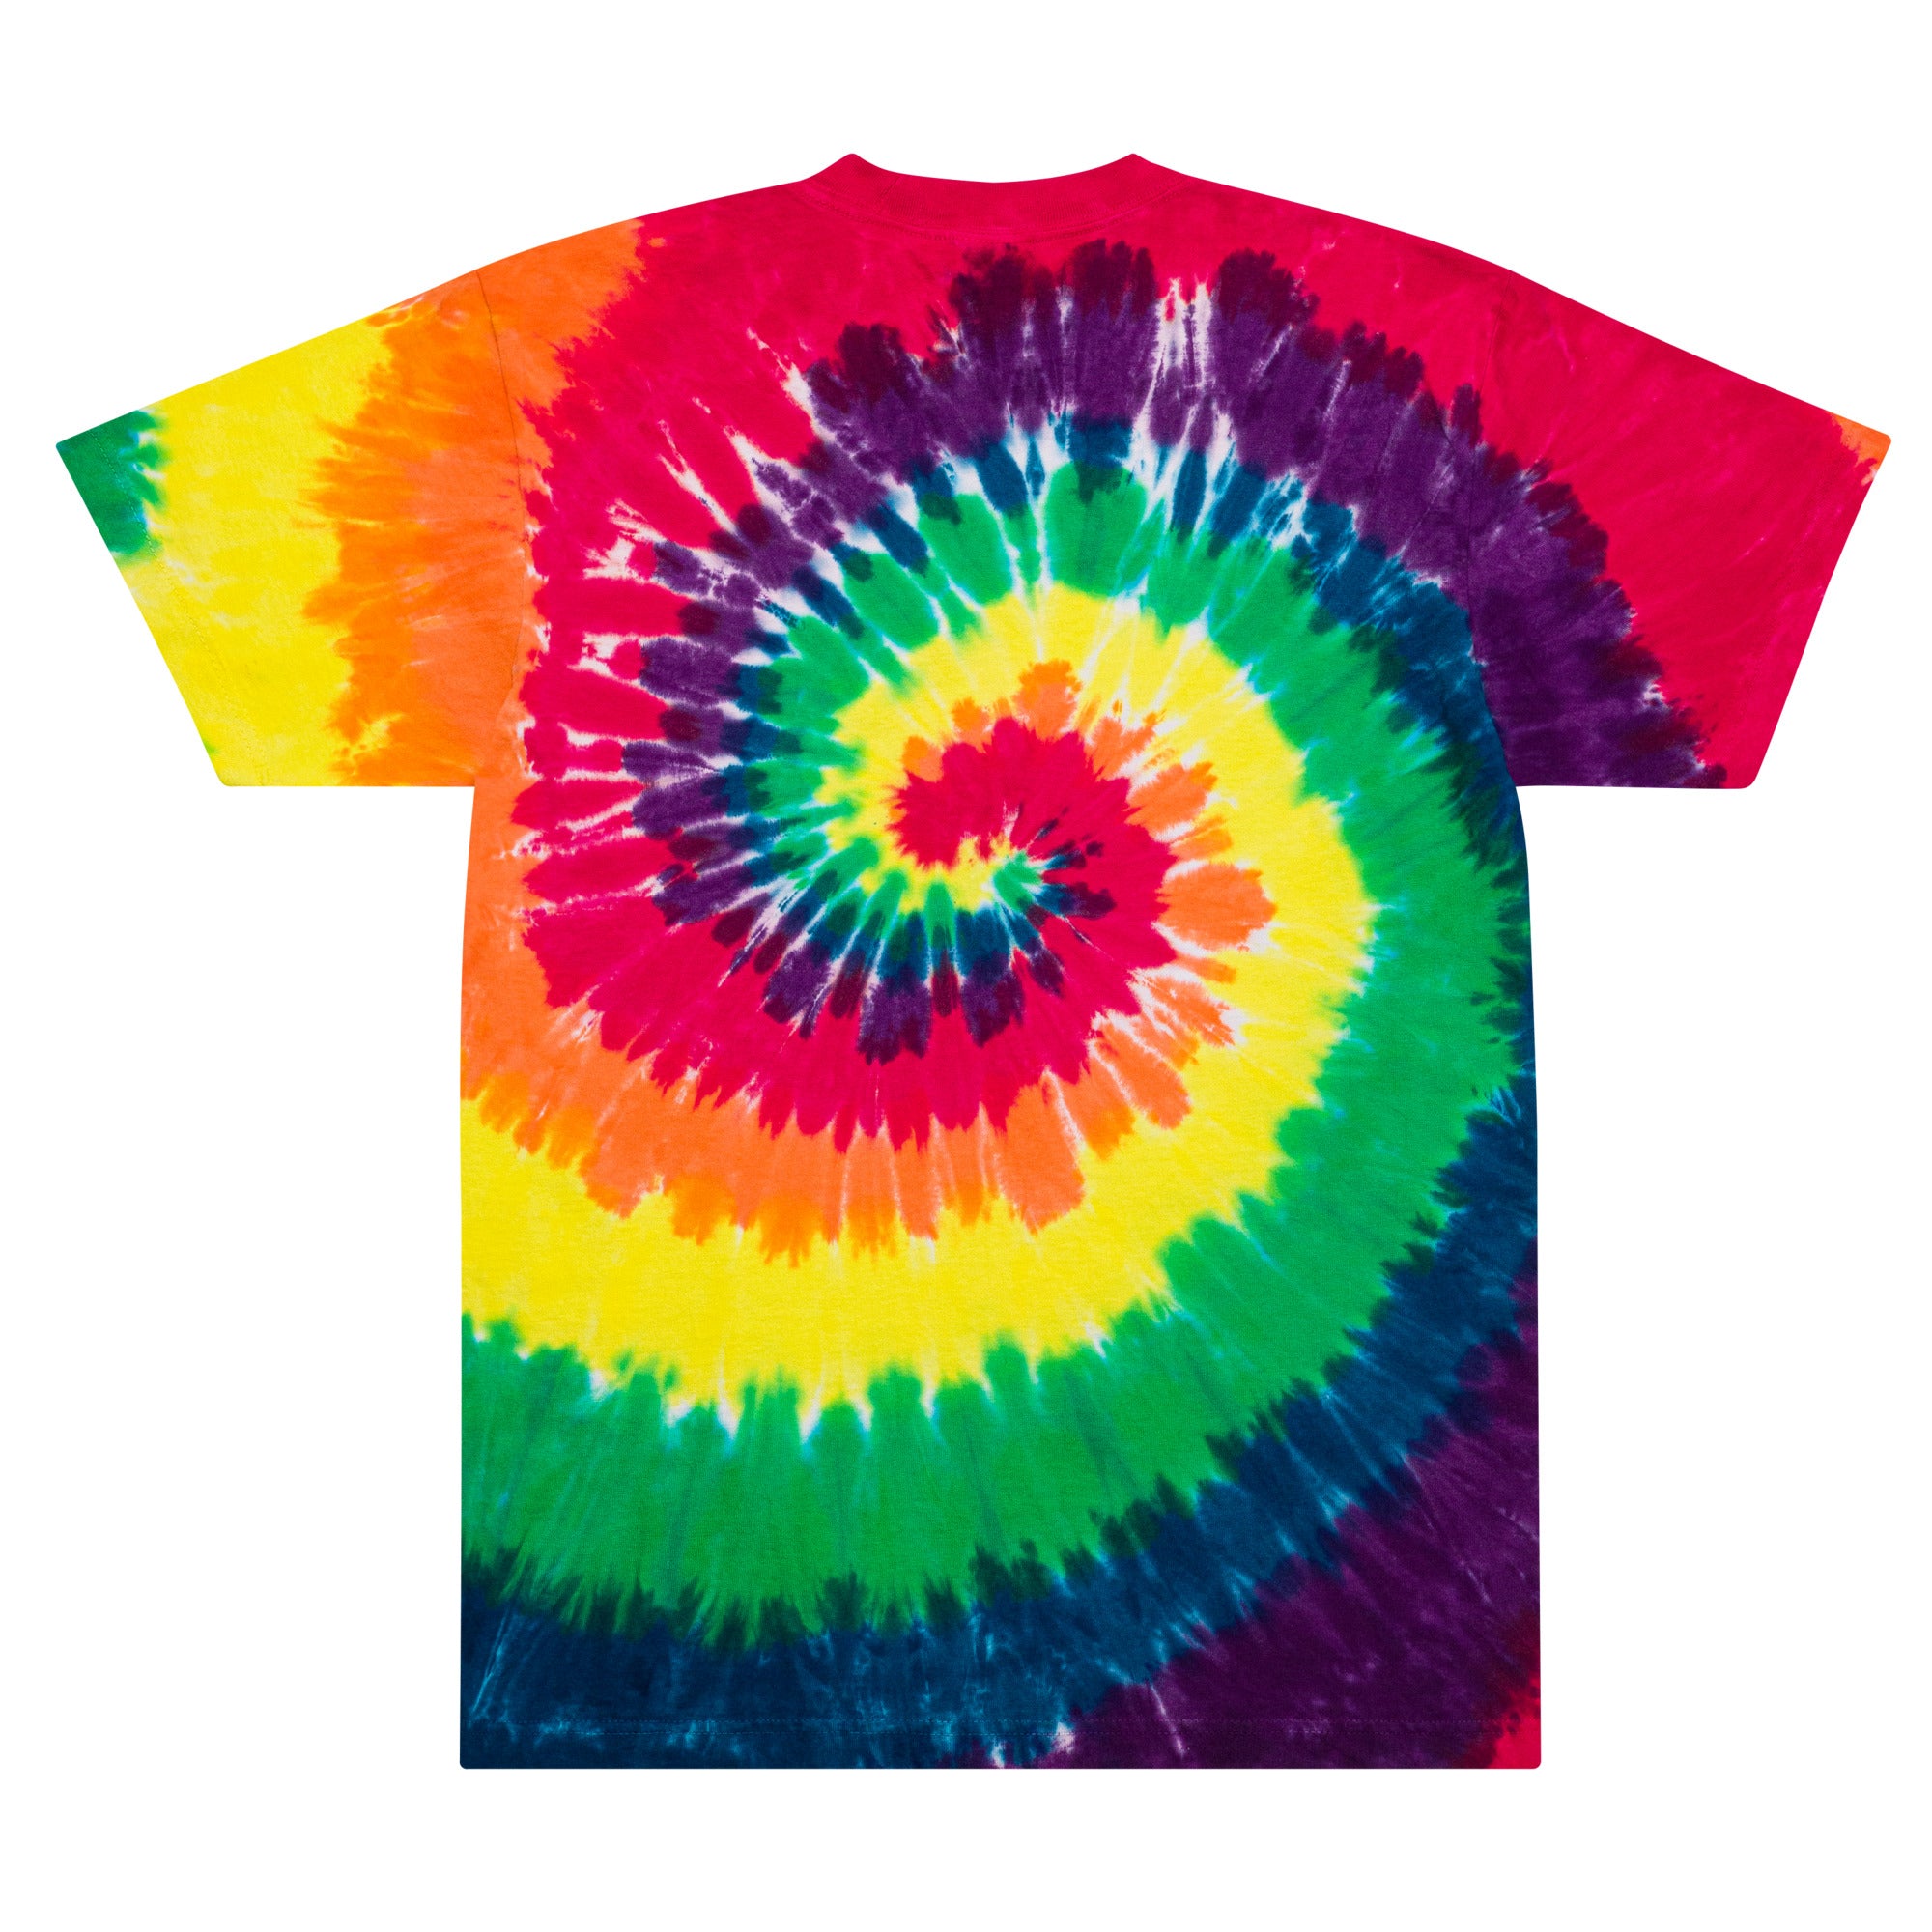 oversized-tie-dye-t-shirt-classic-rainbow-back-6295852498fca.jpg